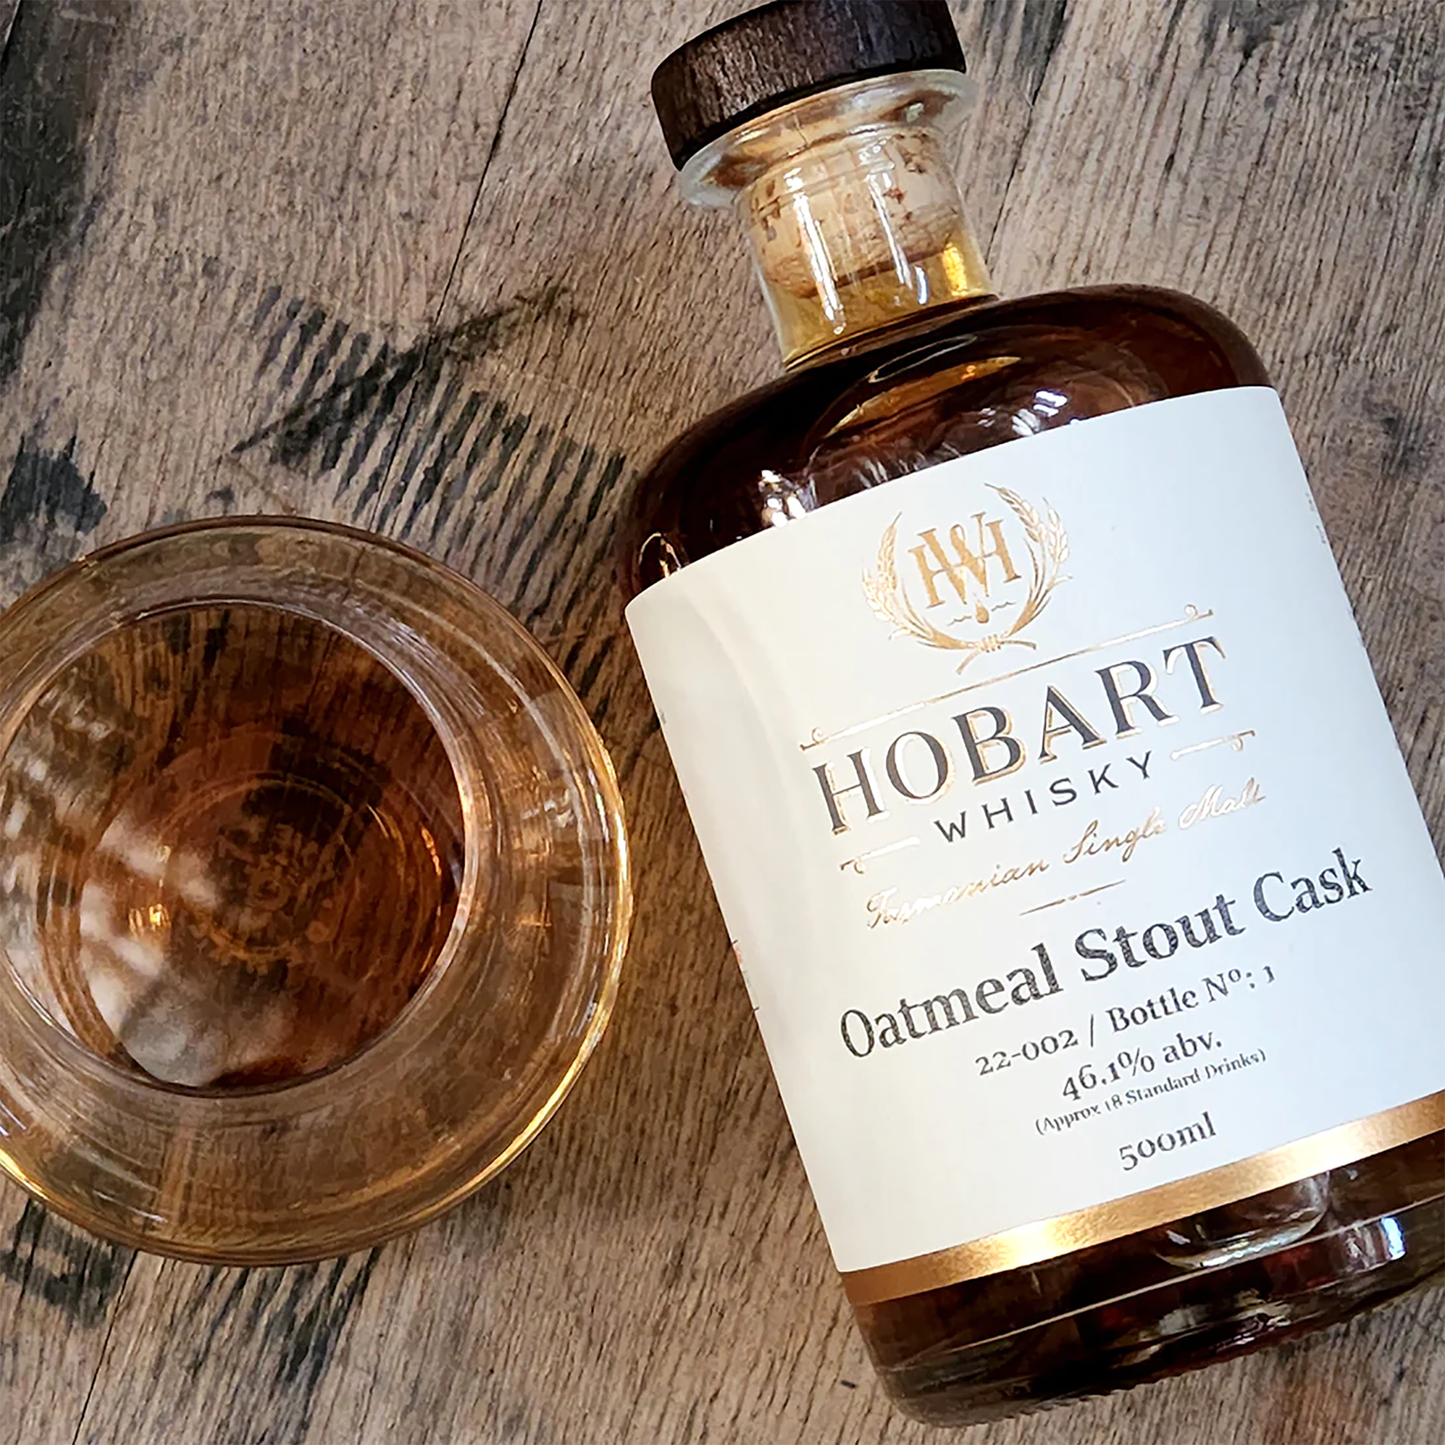 Hobart Whisky Oatmeal Stout Cask Single Malt Whisky 500ml (Batch 22-002)